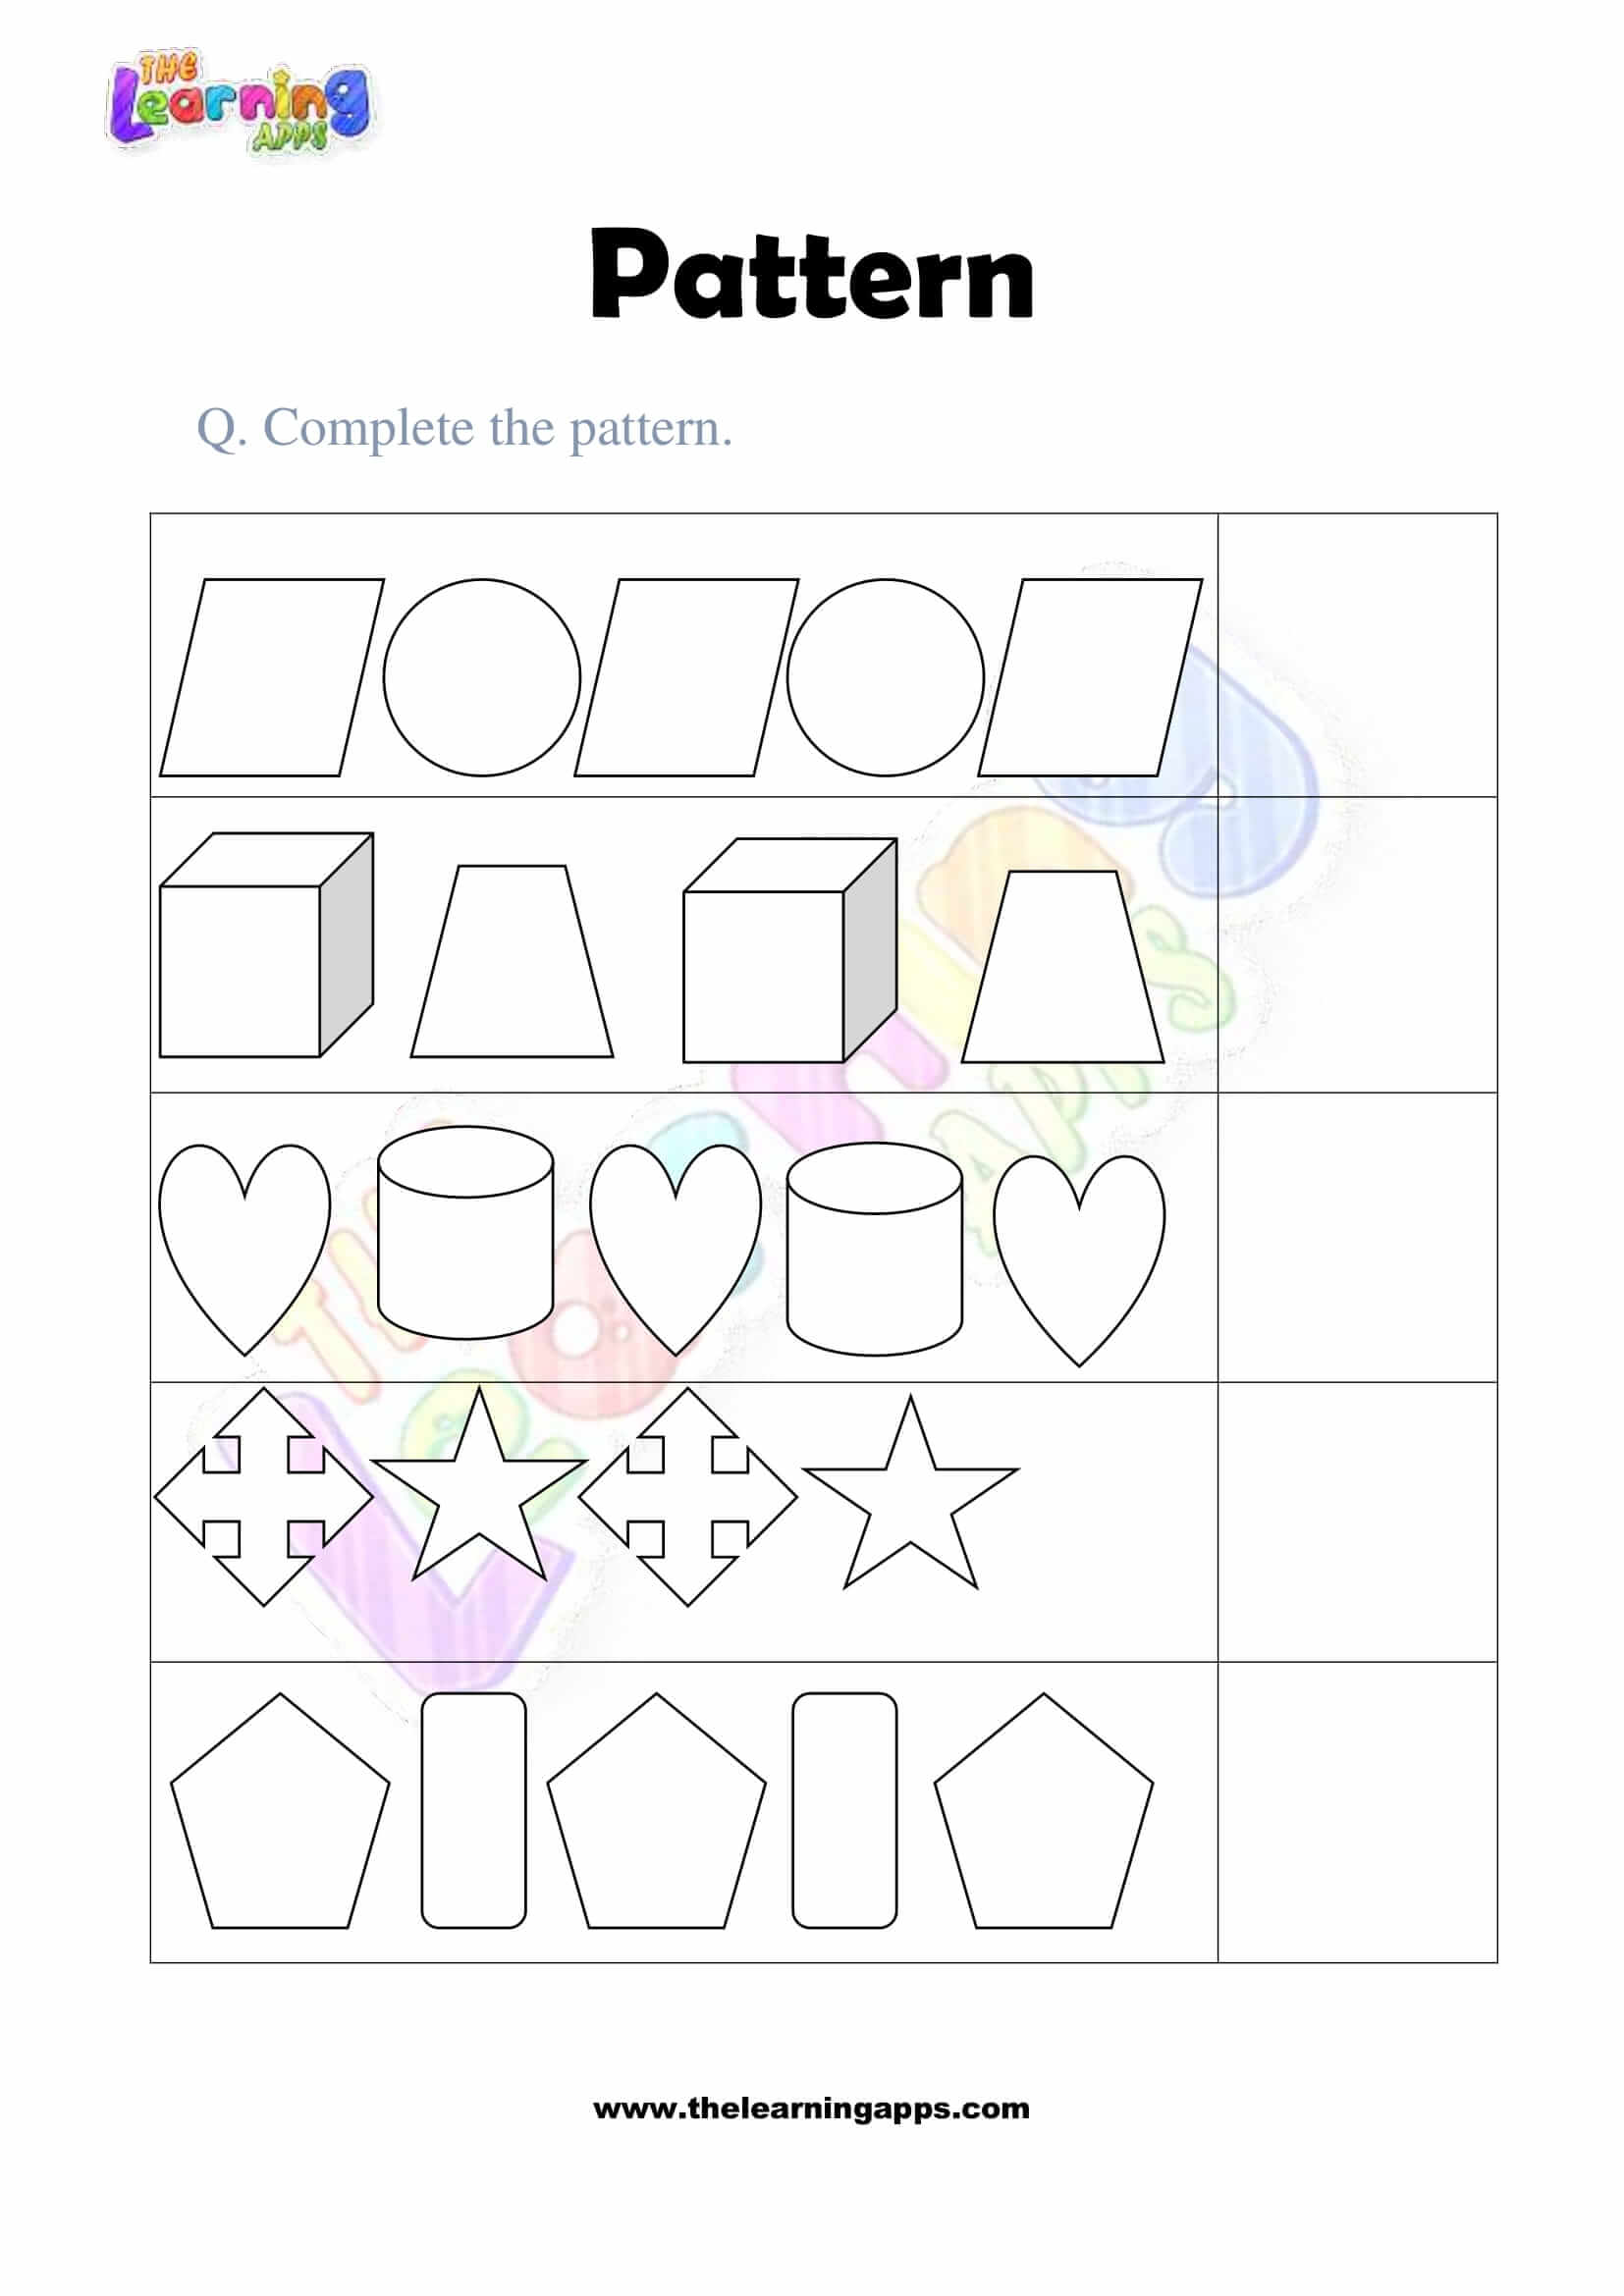 Pattern Worksheet - Grade 2 - Activity 8